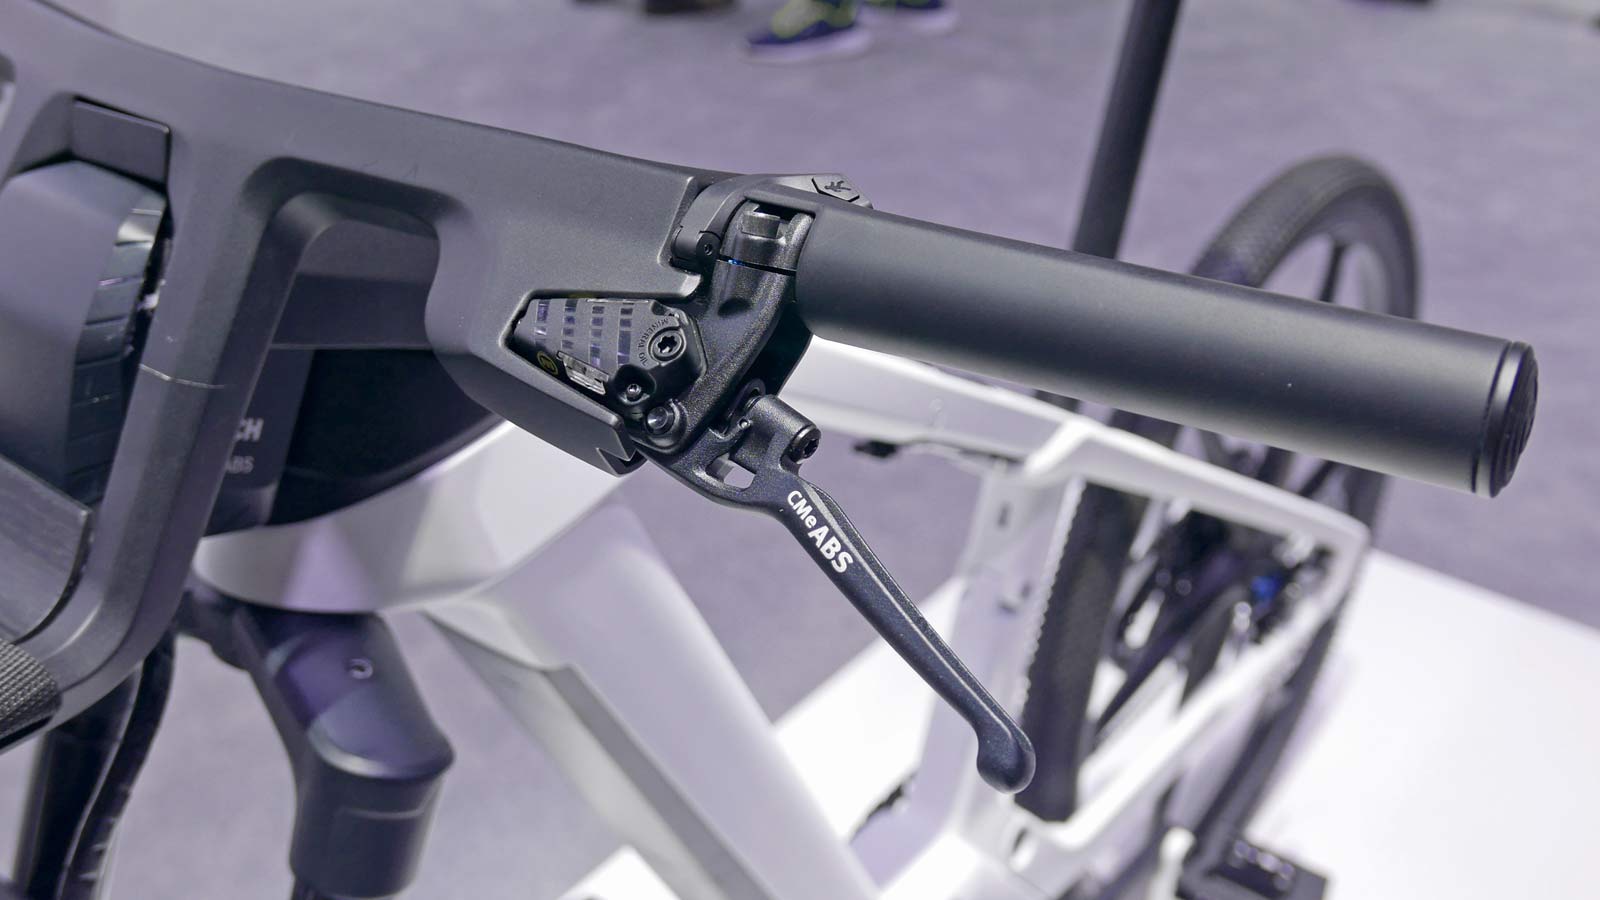 Bosch eBike ABS prototype e-bike with integrated anti-lock braking, Margura lever